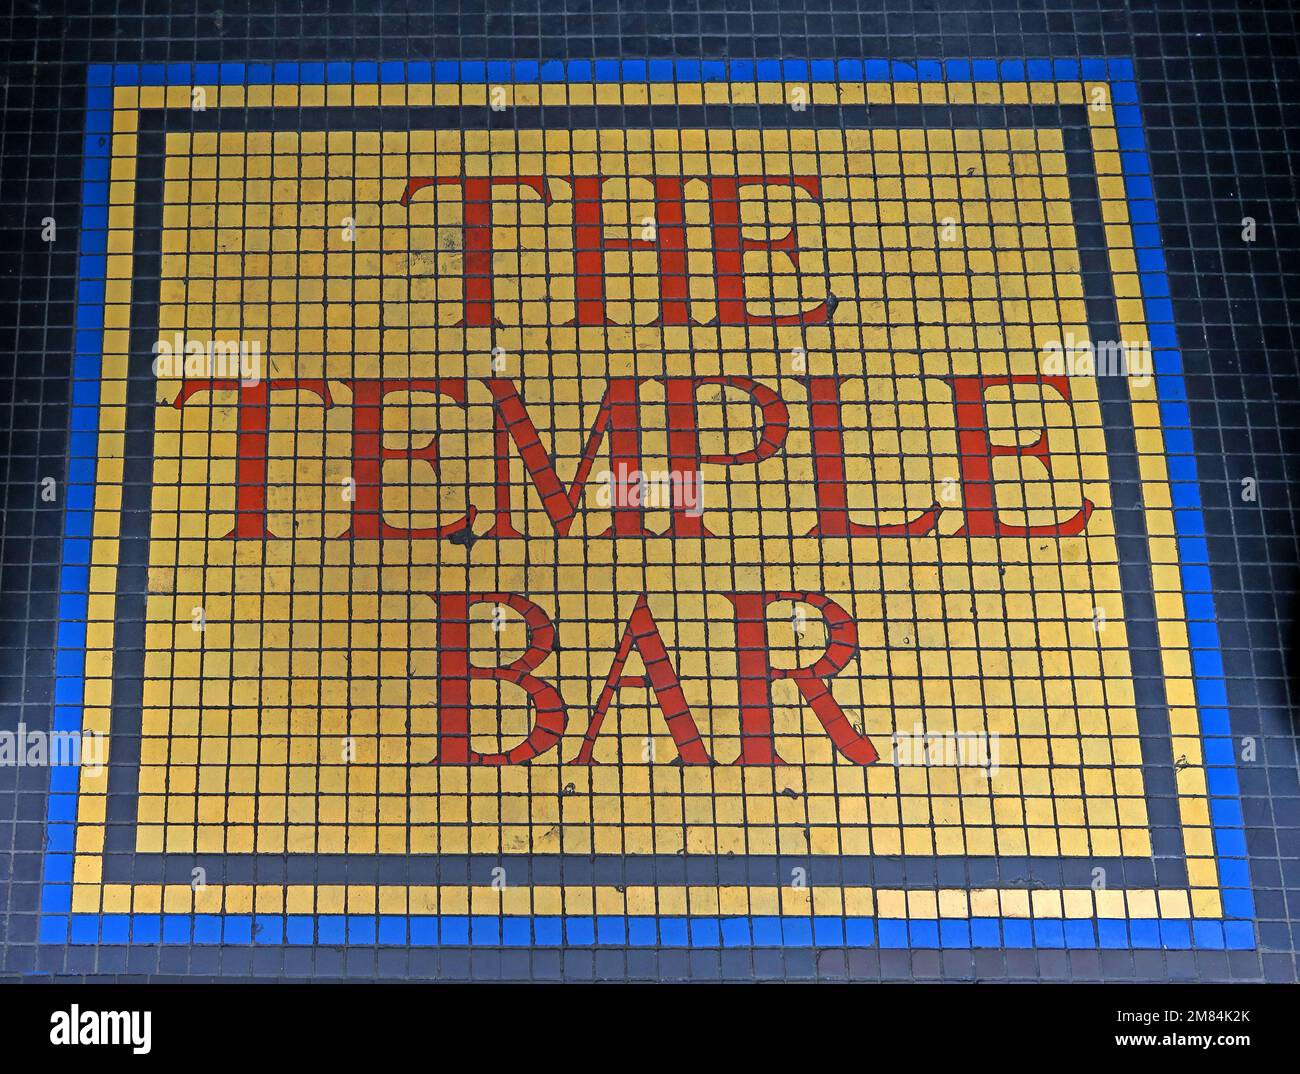 Pavimento a mosaico al Temple Bar, Dublino, Est 1840, 47-48 Temple Bar, Dublino 2, D02 N725, Eire, Irlanda Foto Stock